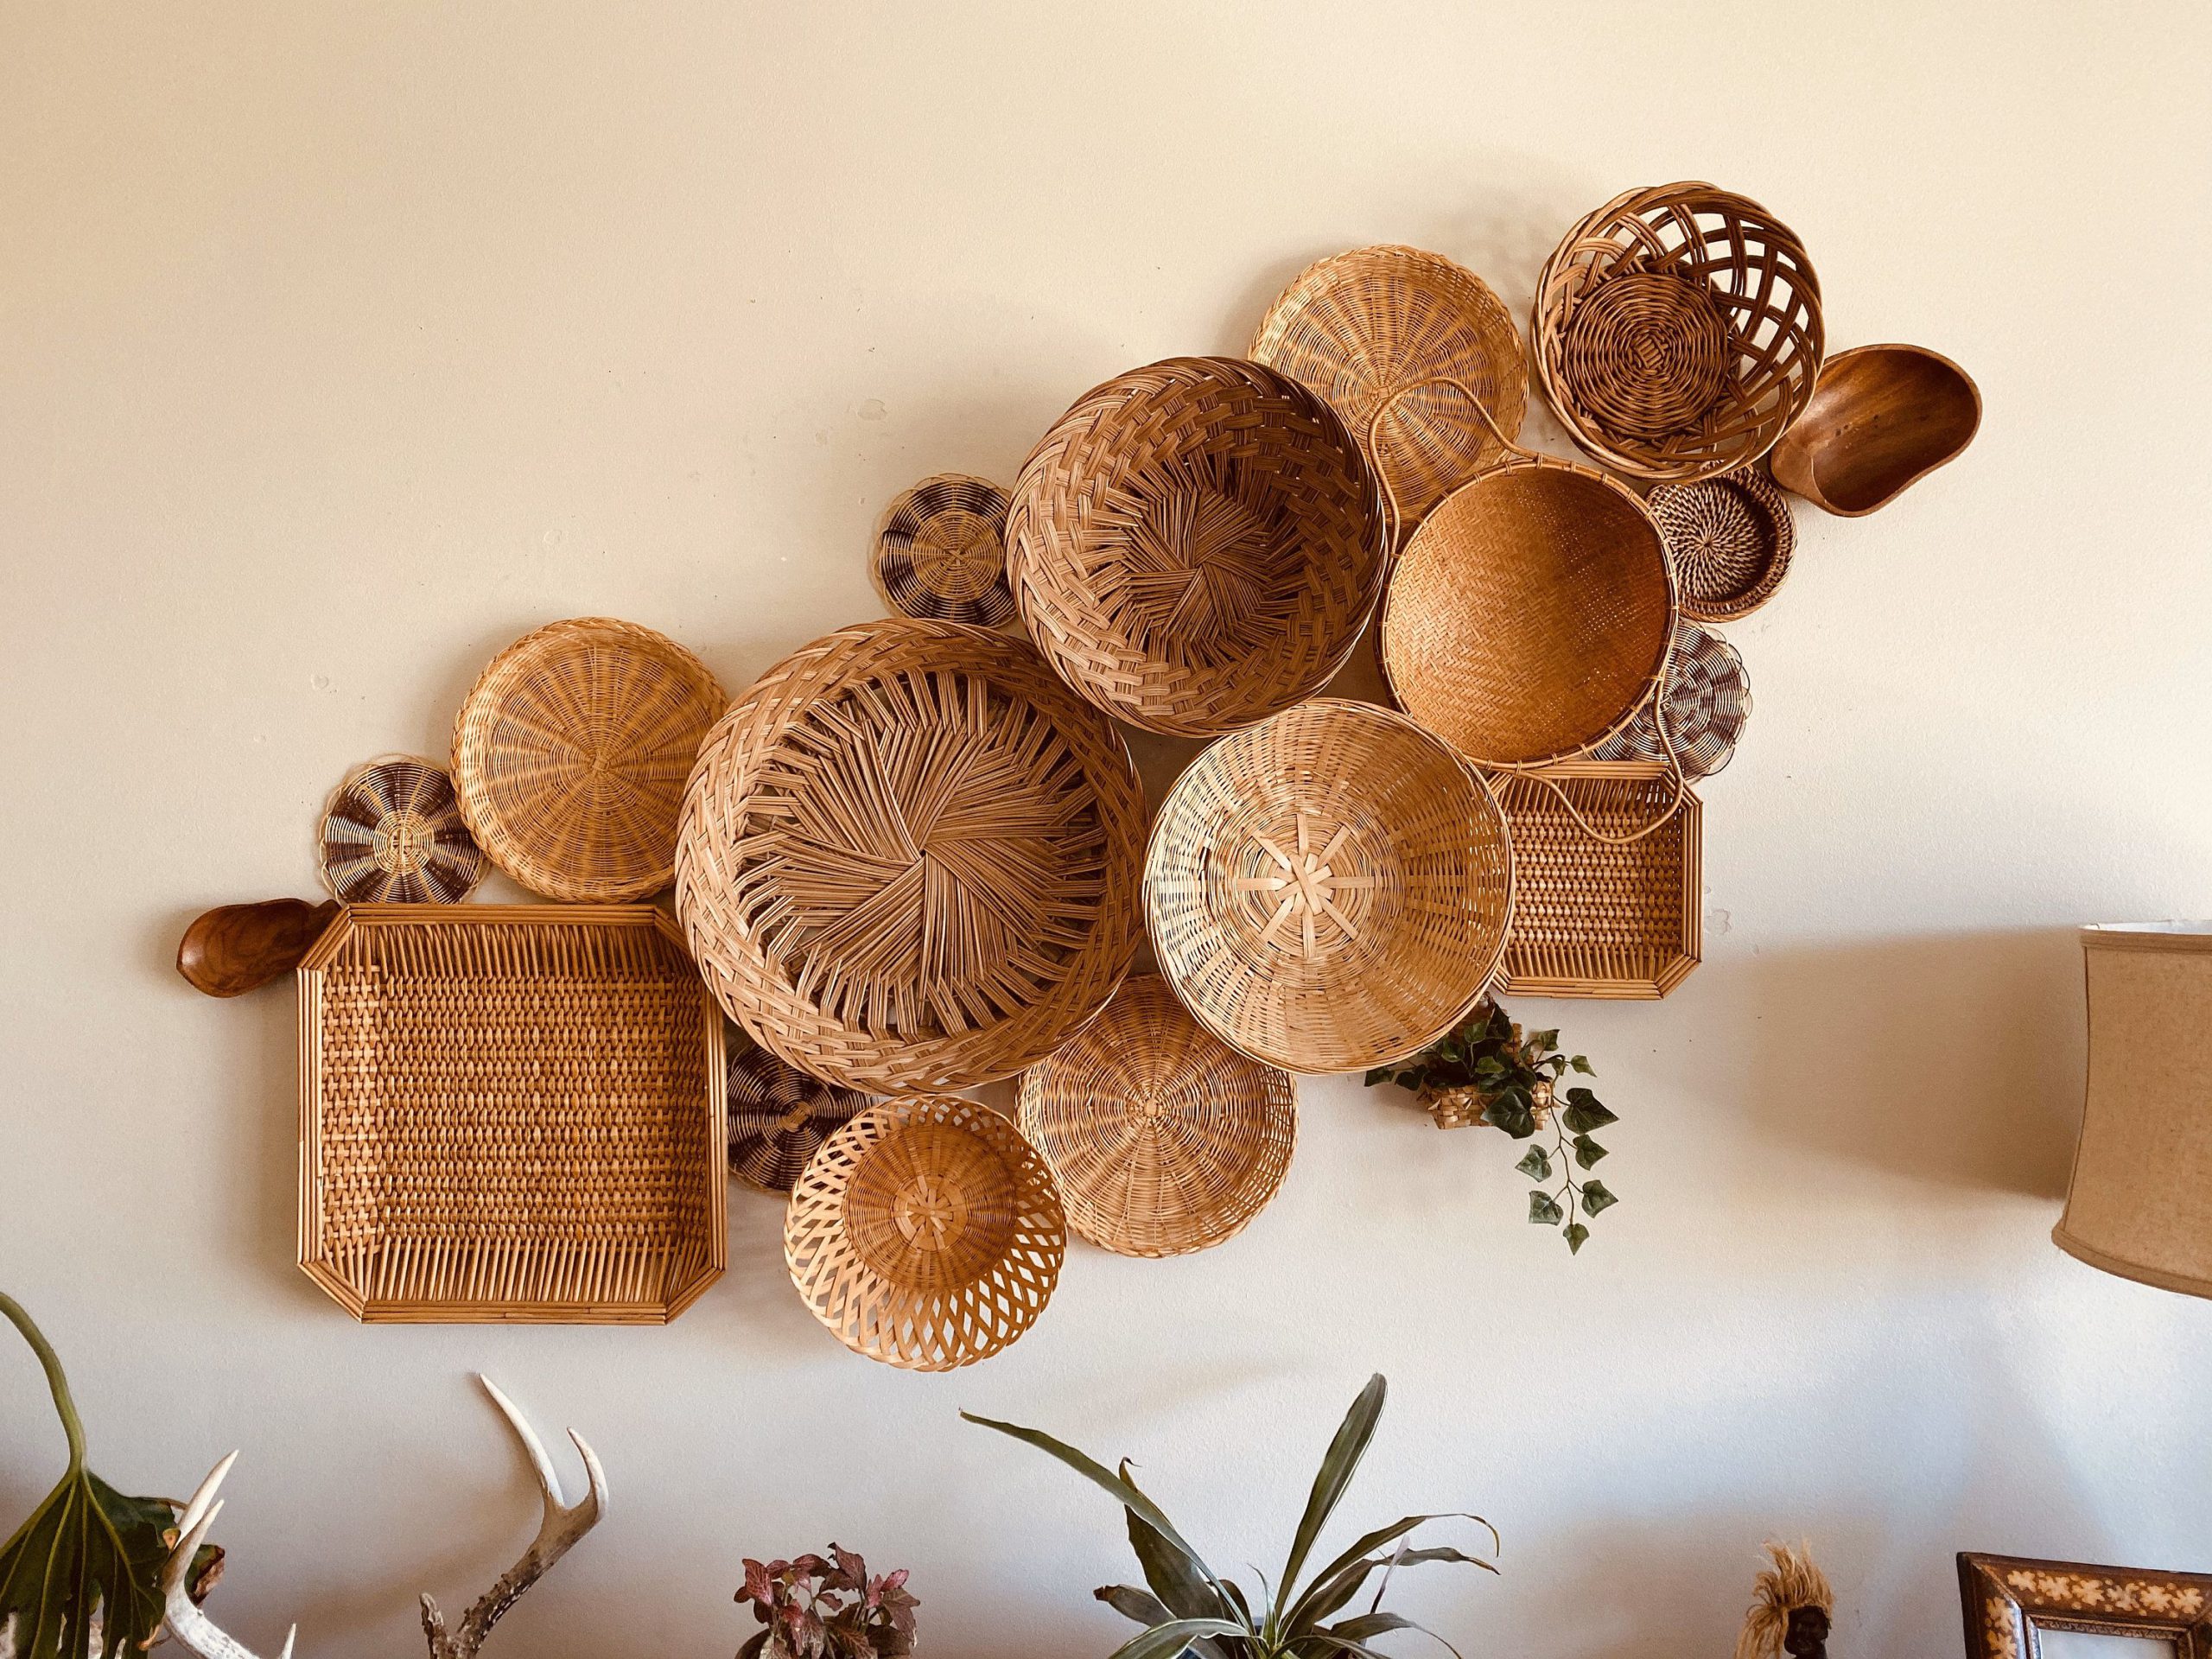 Bohemian Style Wall Art from Basket